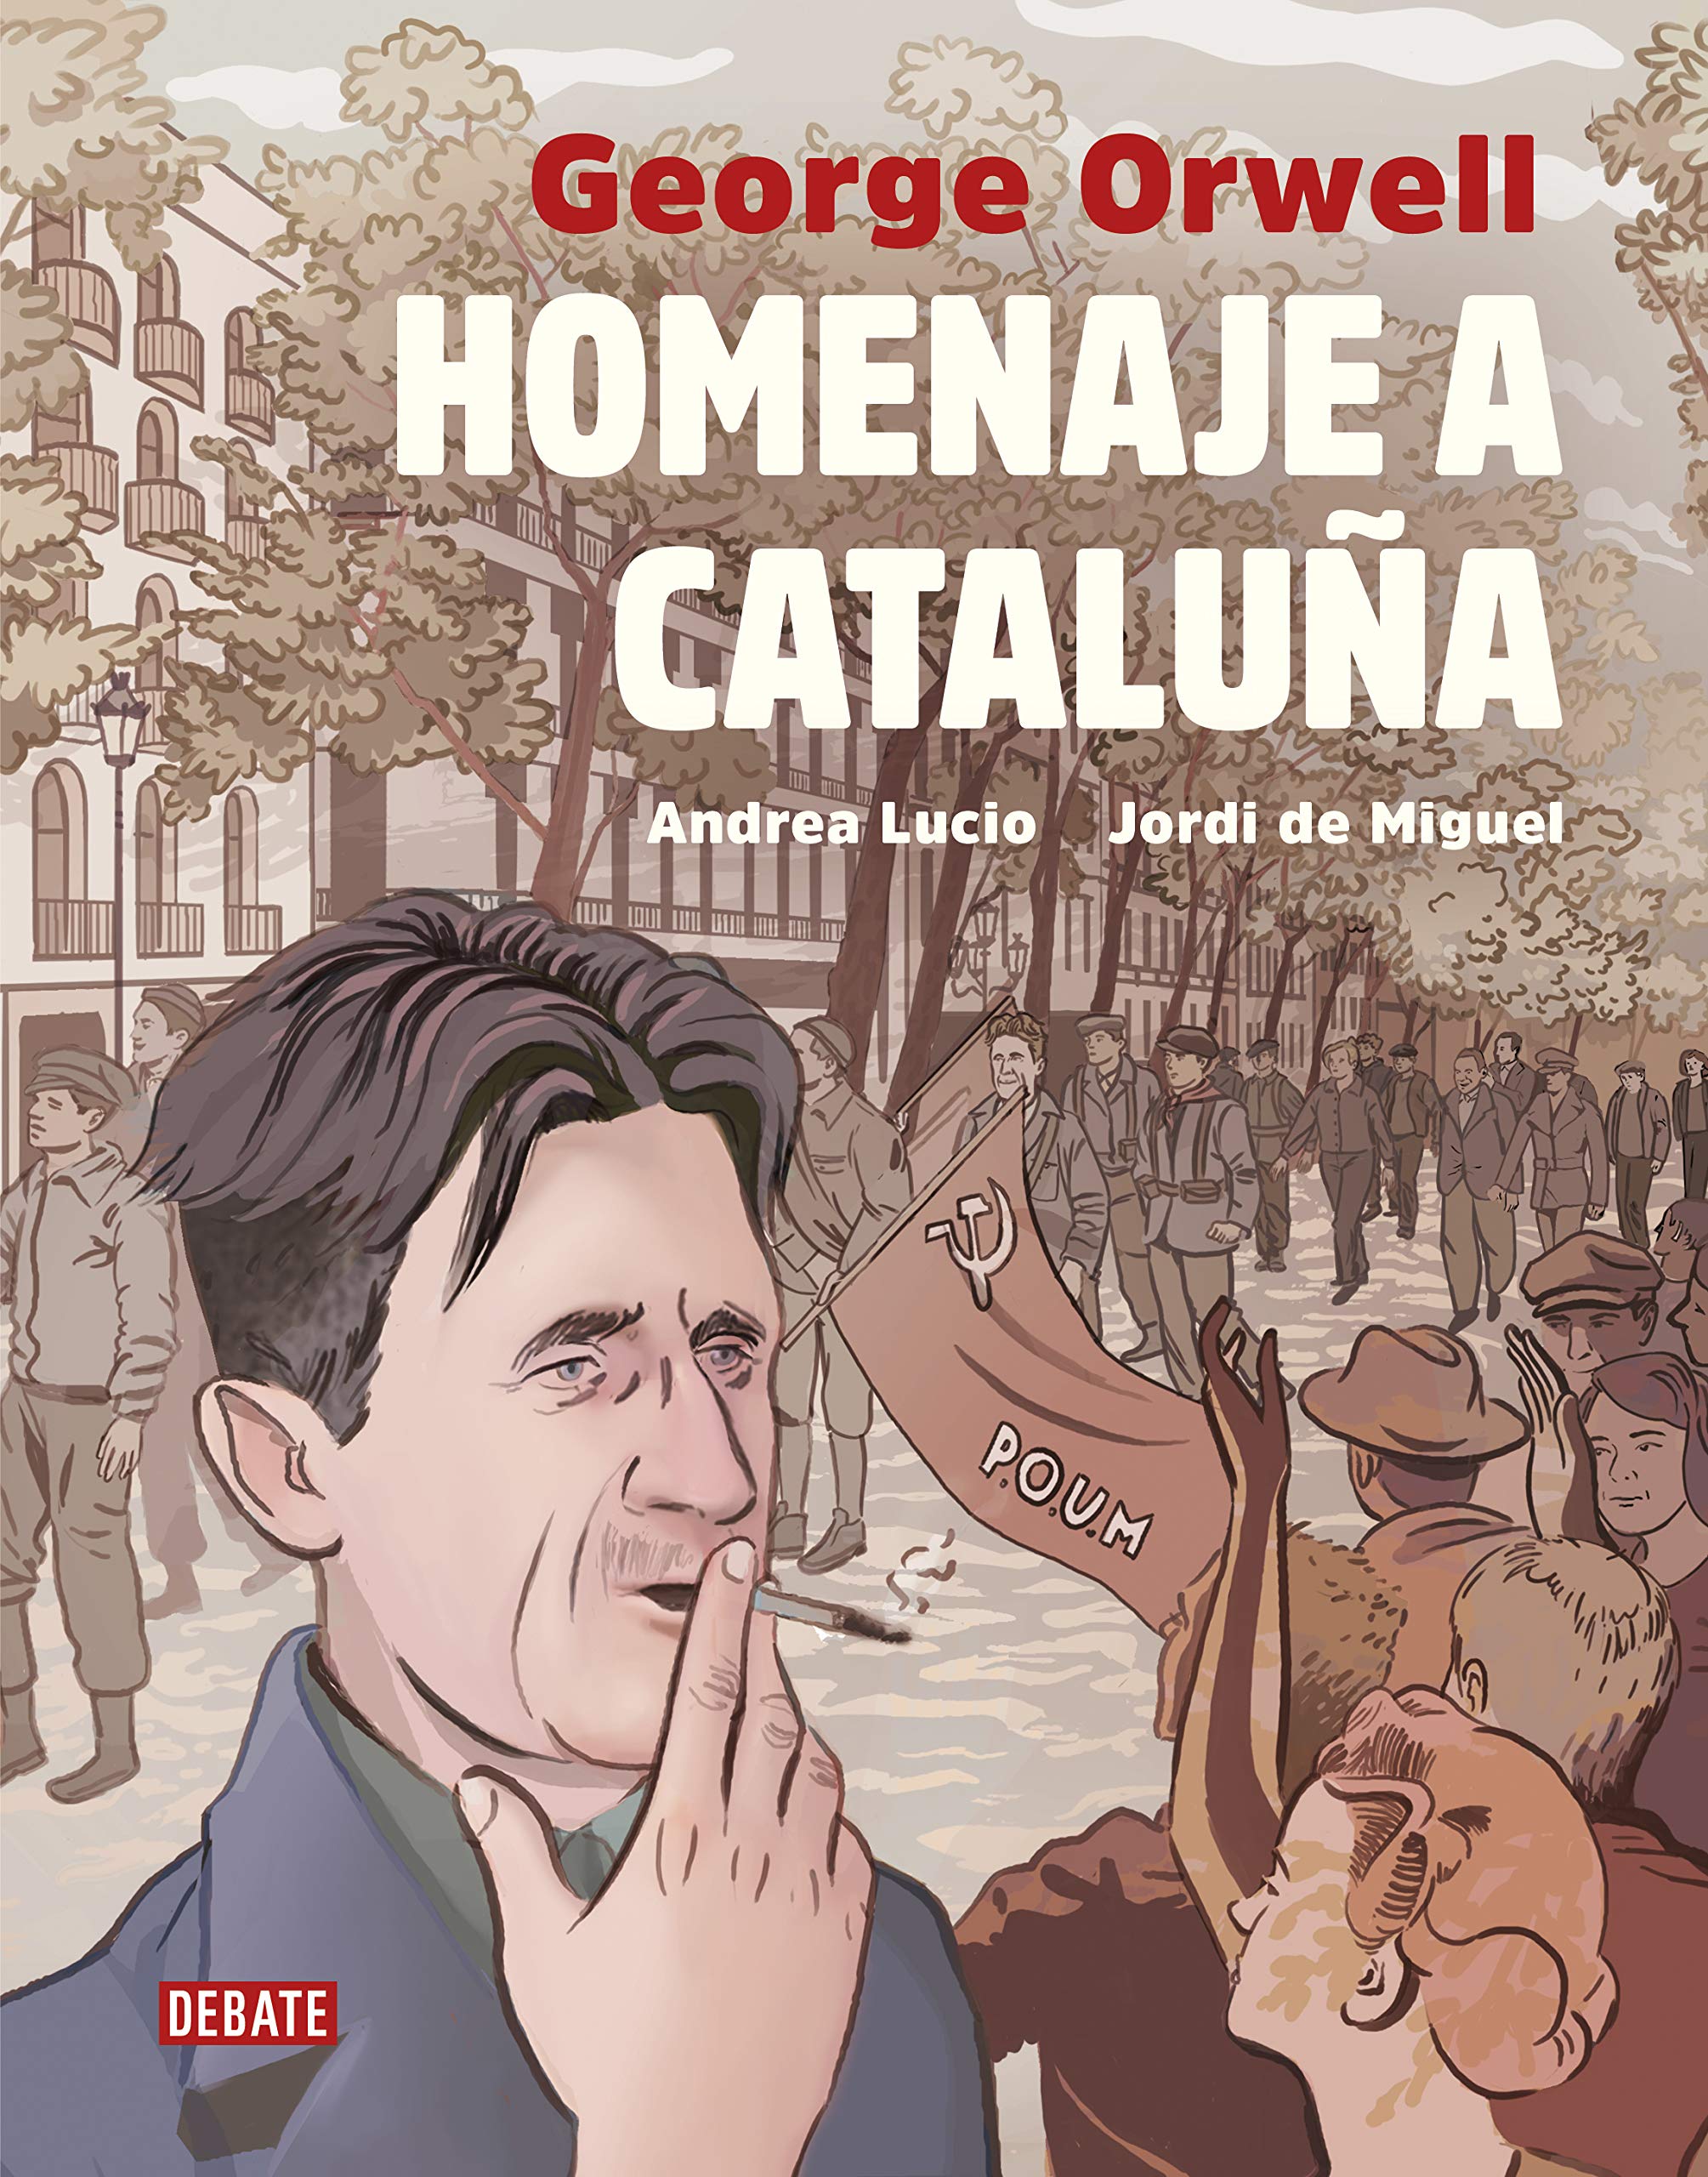 Homenaje a Cataluna